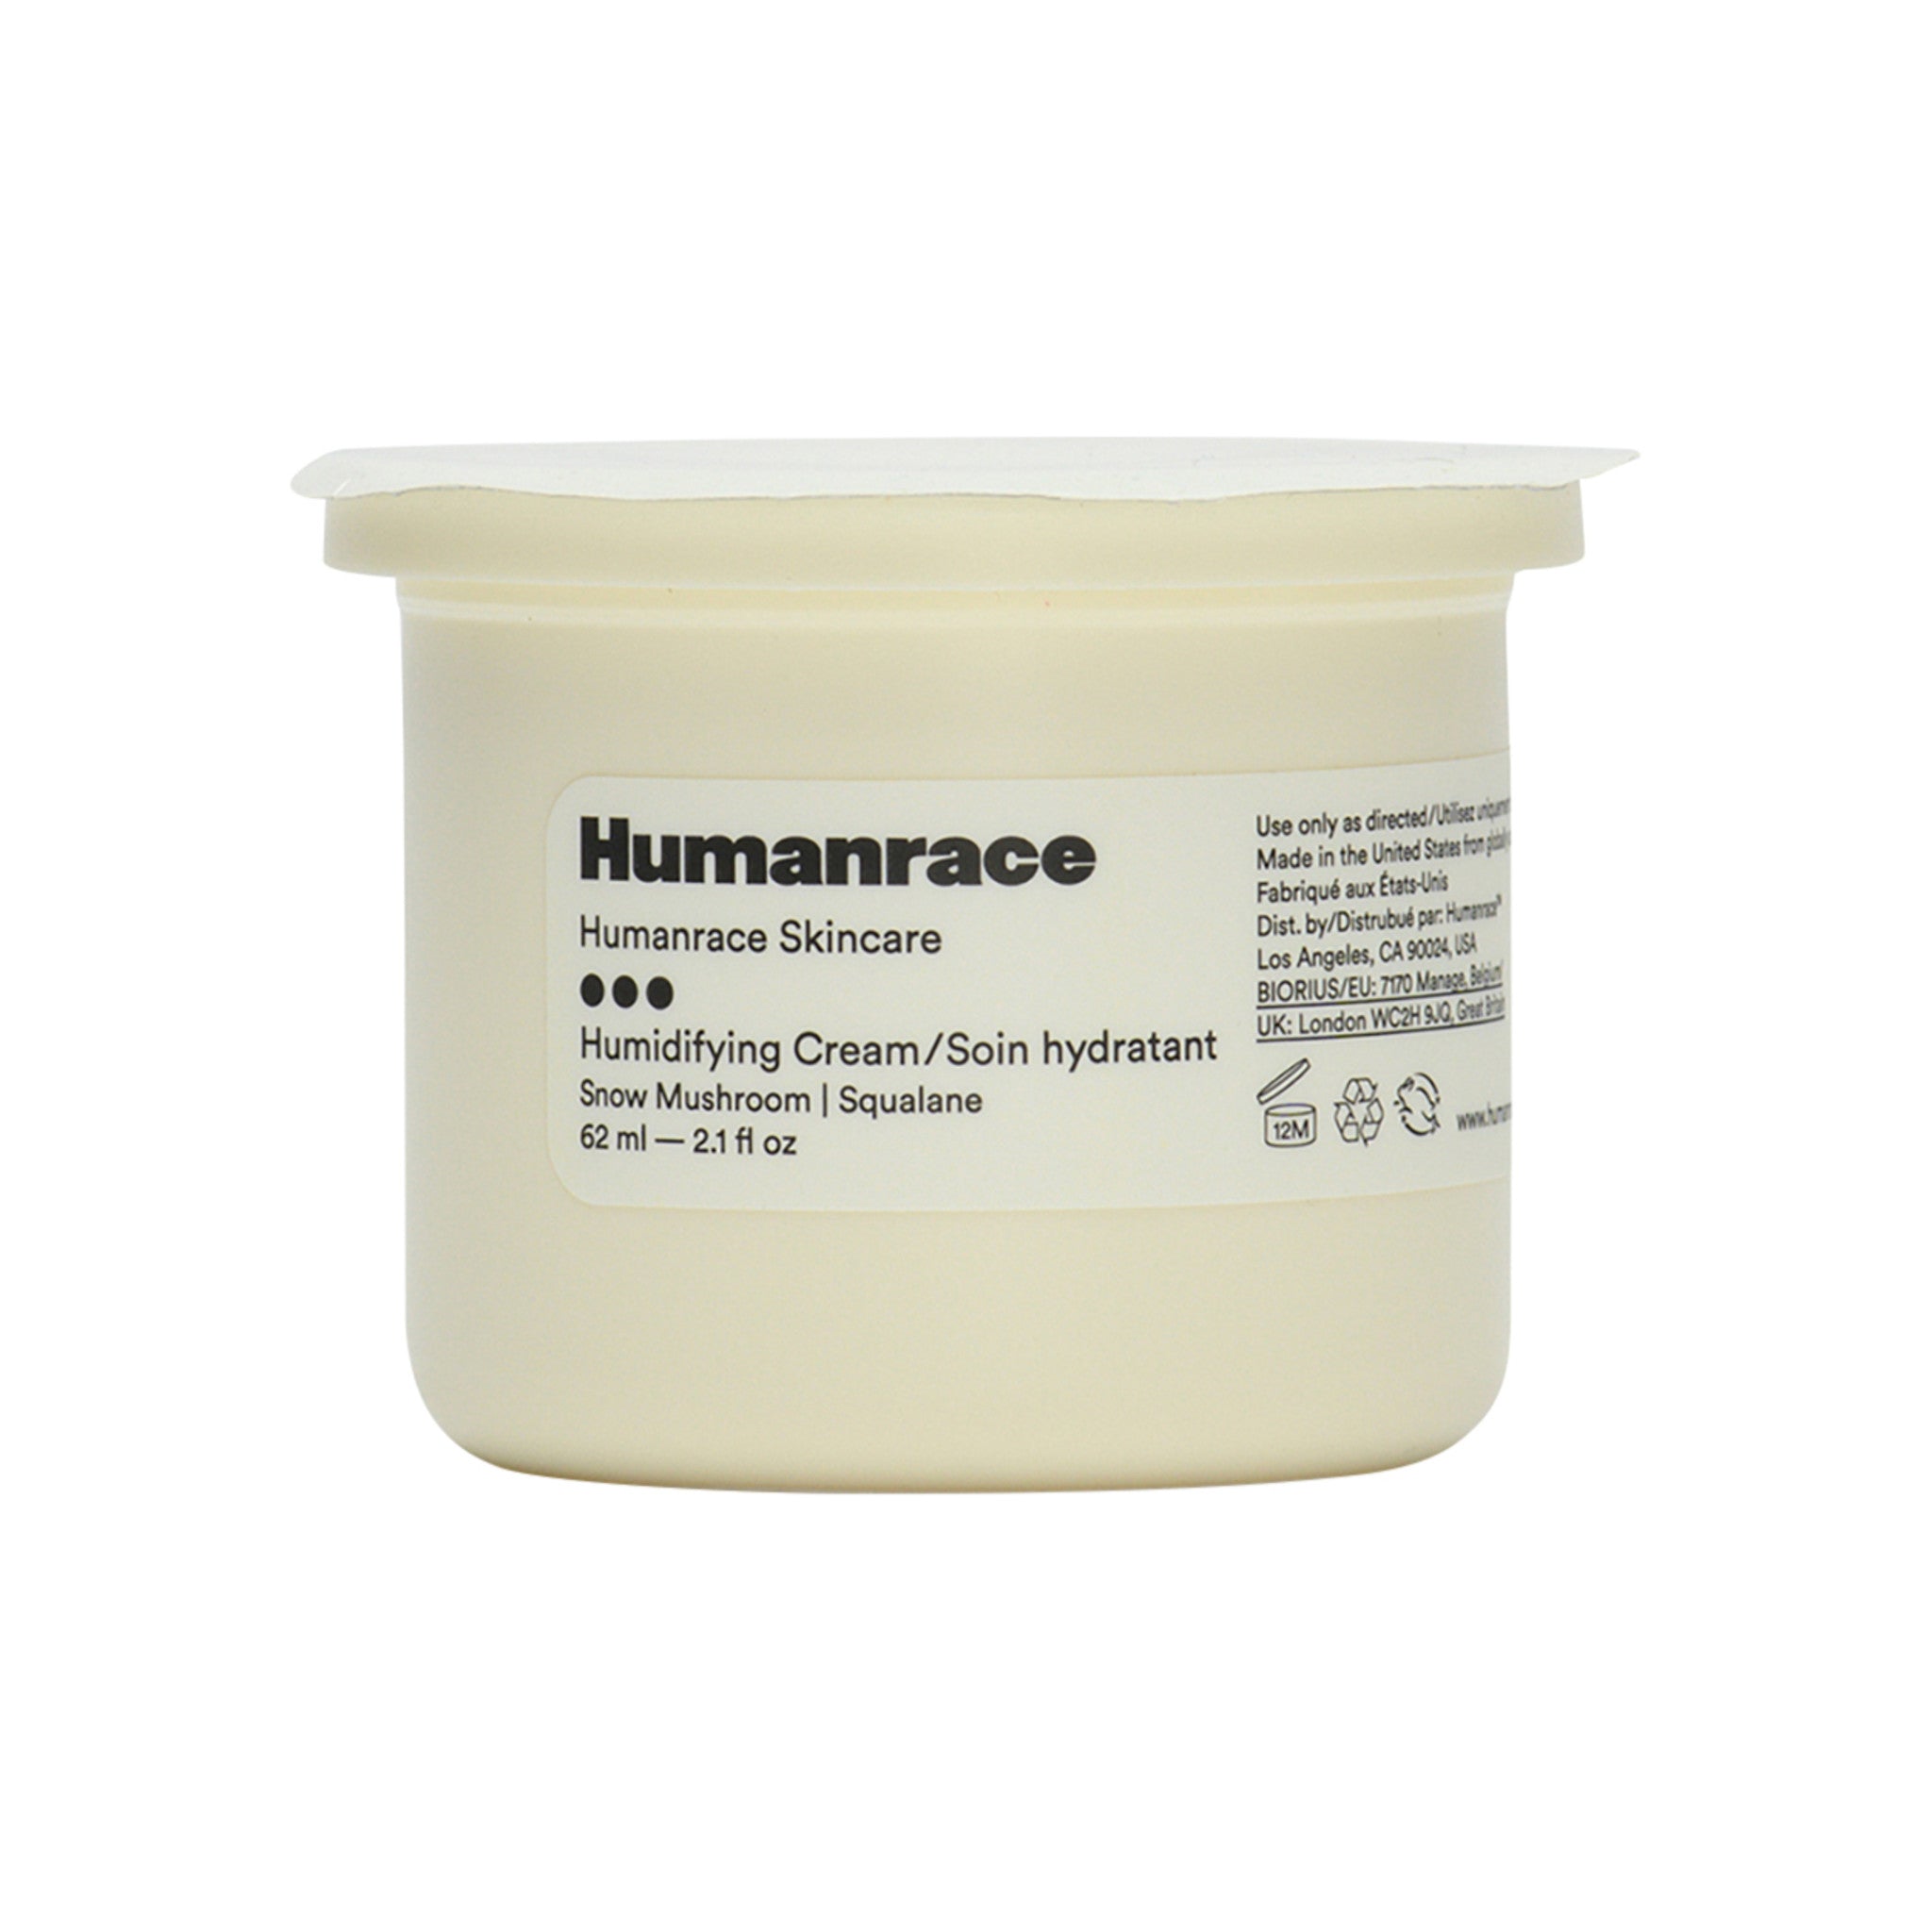 Humanrace Humidifying Face Cream Refill main image.